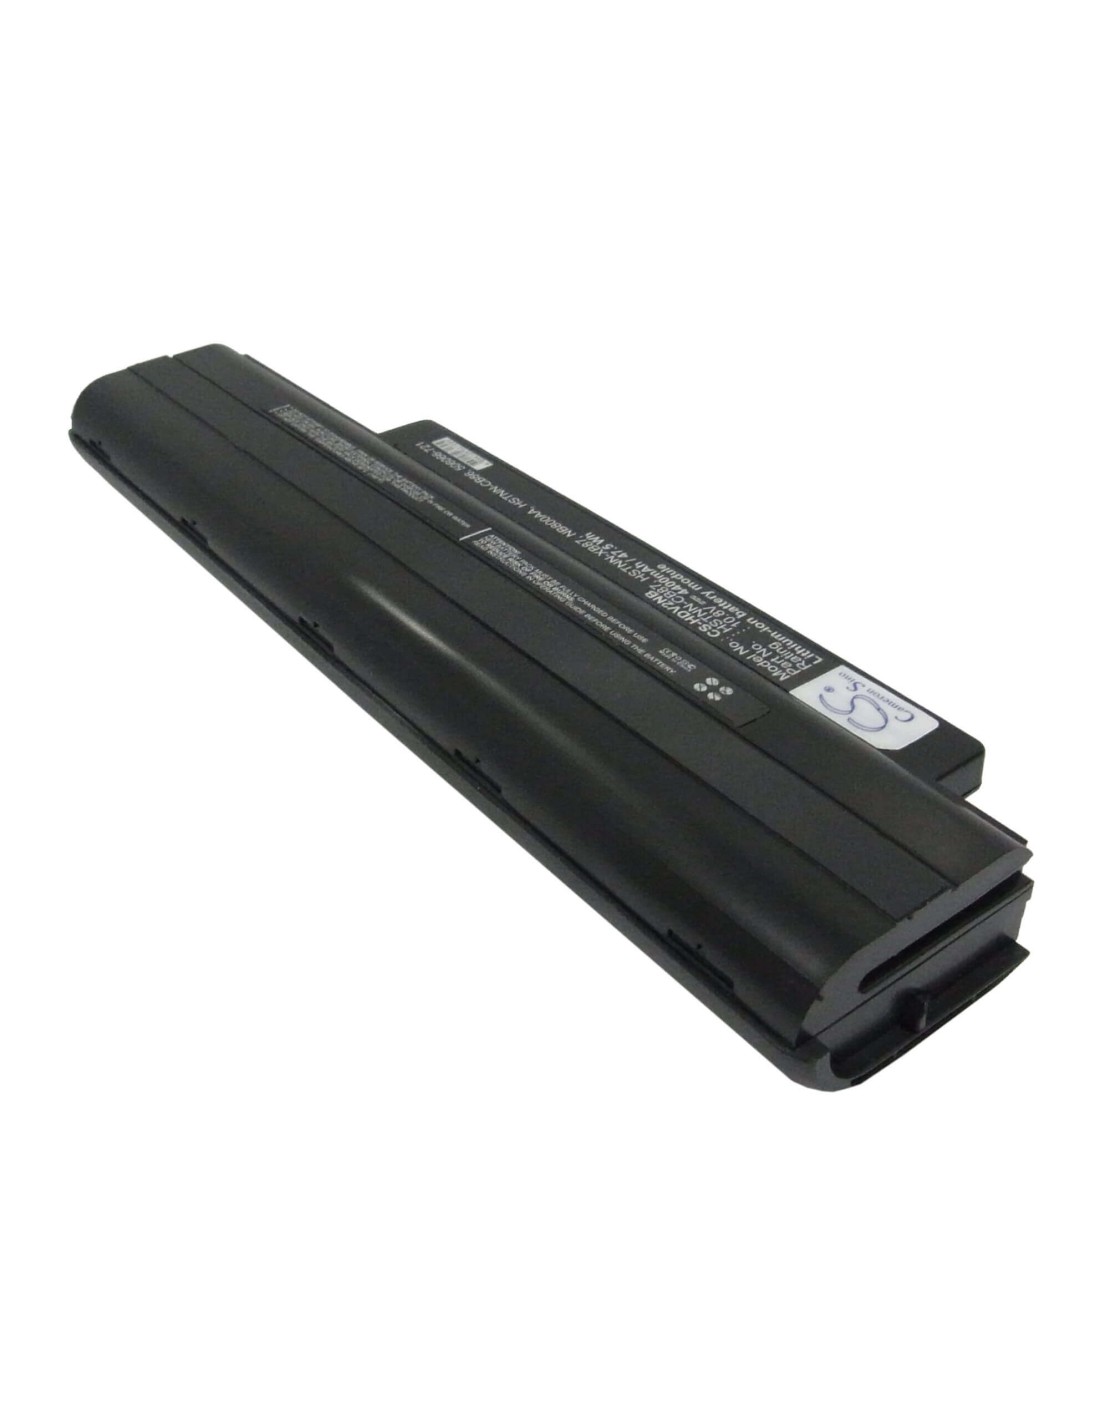 Black Battery for HP Pavilion dv2, Pavilion dv2-1000, Pavilion dv2-1001ax 10.8V, 4400mAh - 47.52Wh